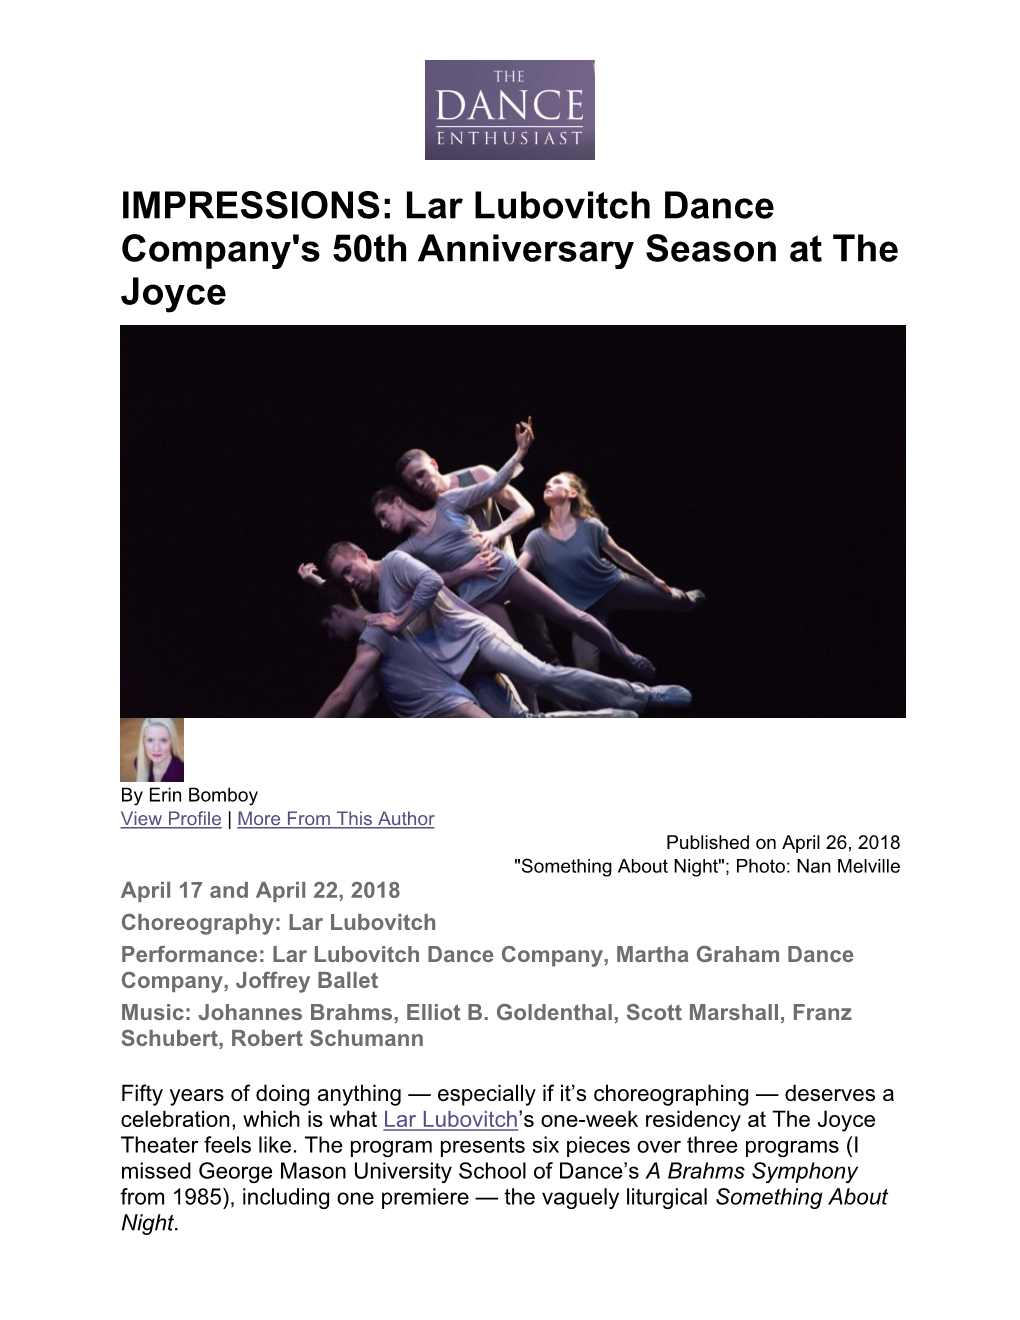 IMPRESSIONS: Lar Lubovitch Dance Company's 50Th Anniversary Season at the Joyce